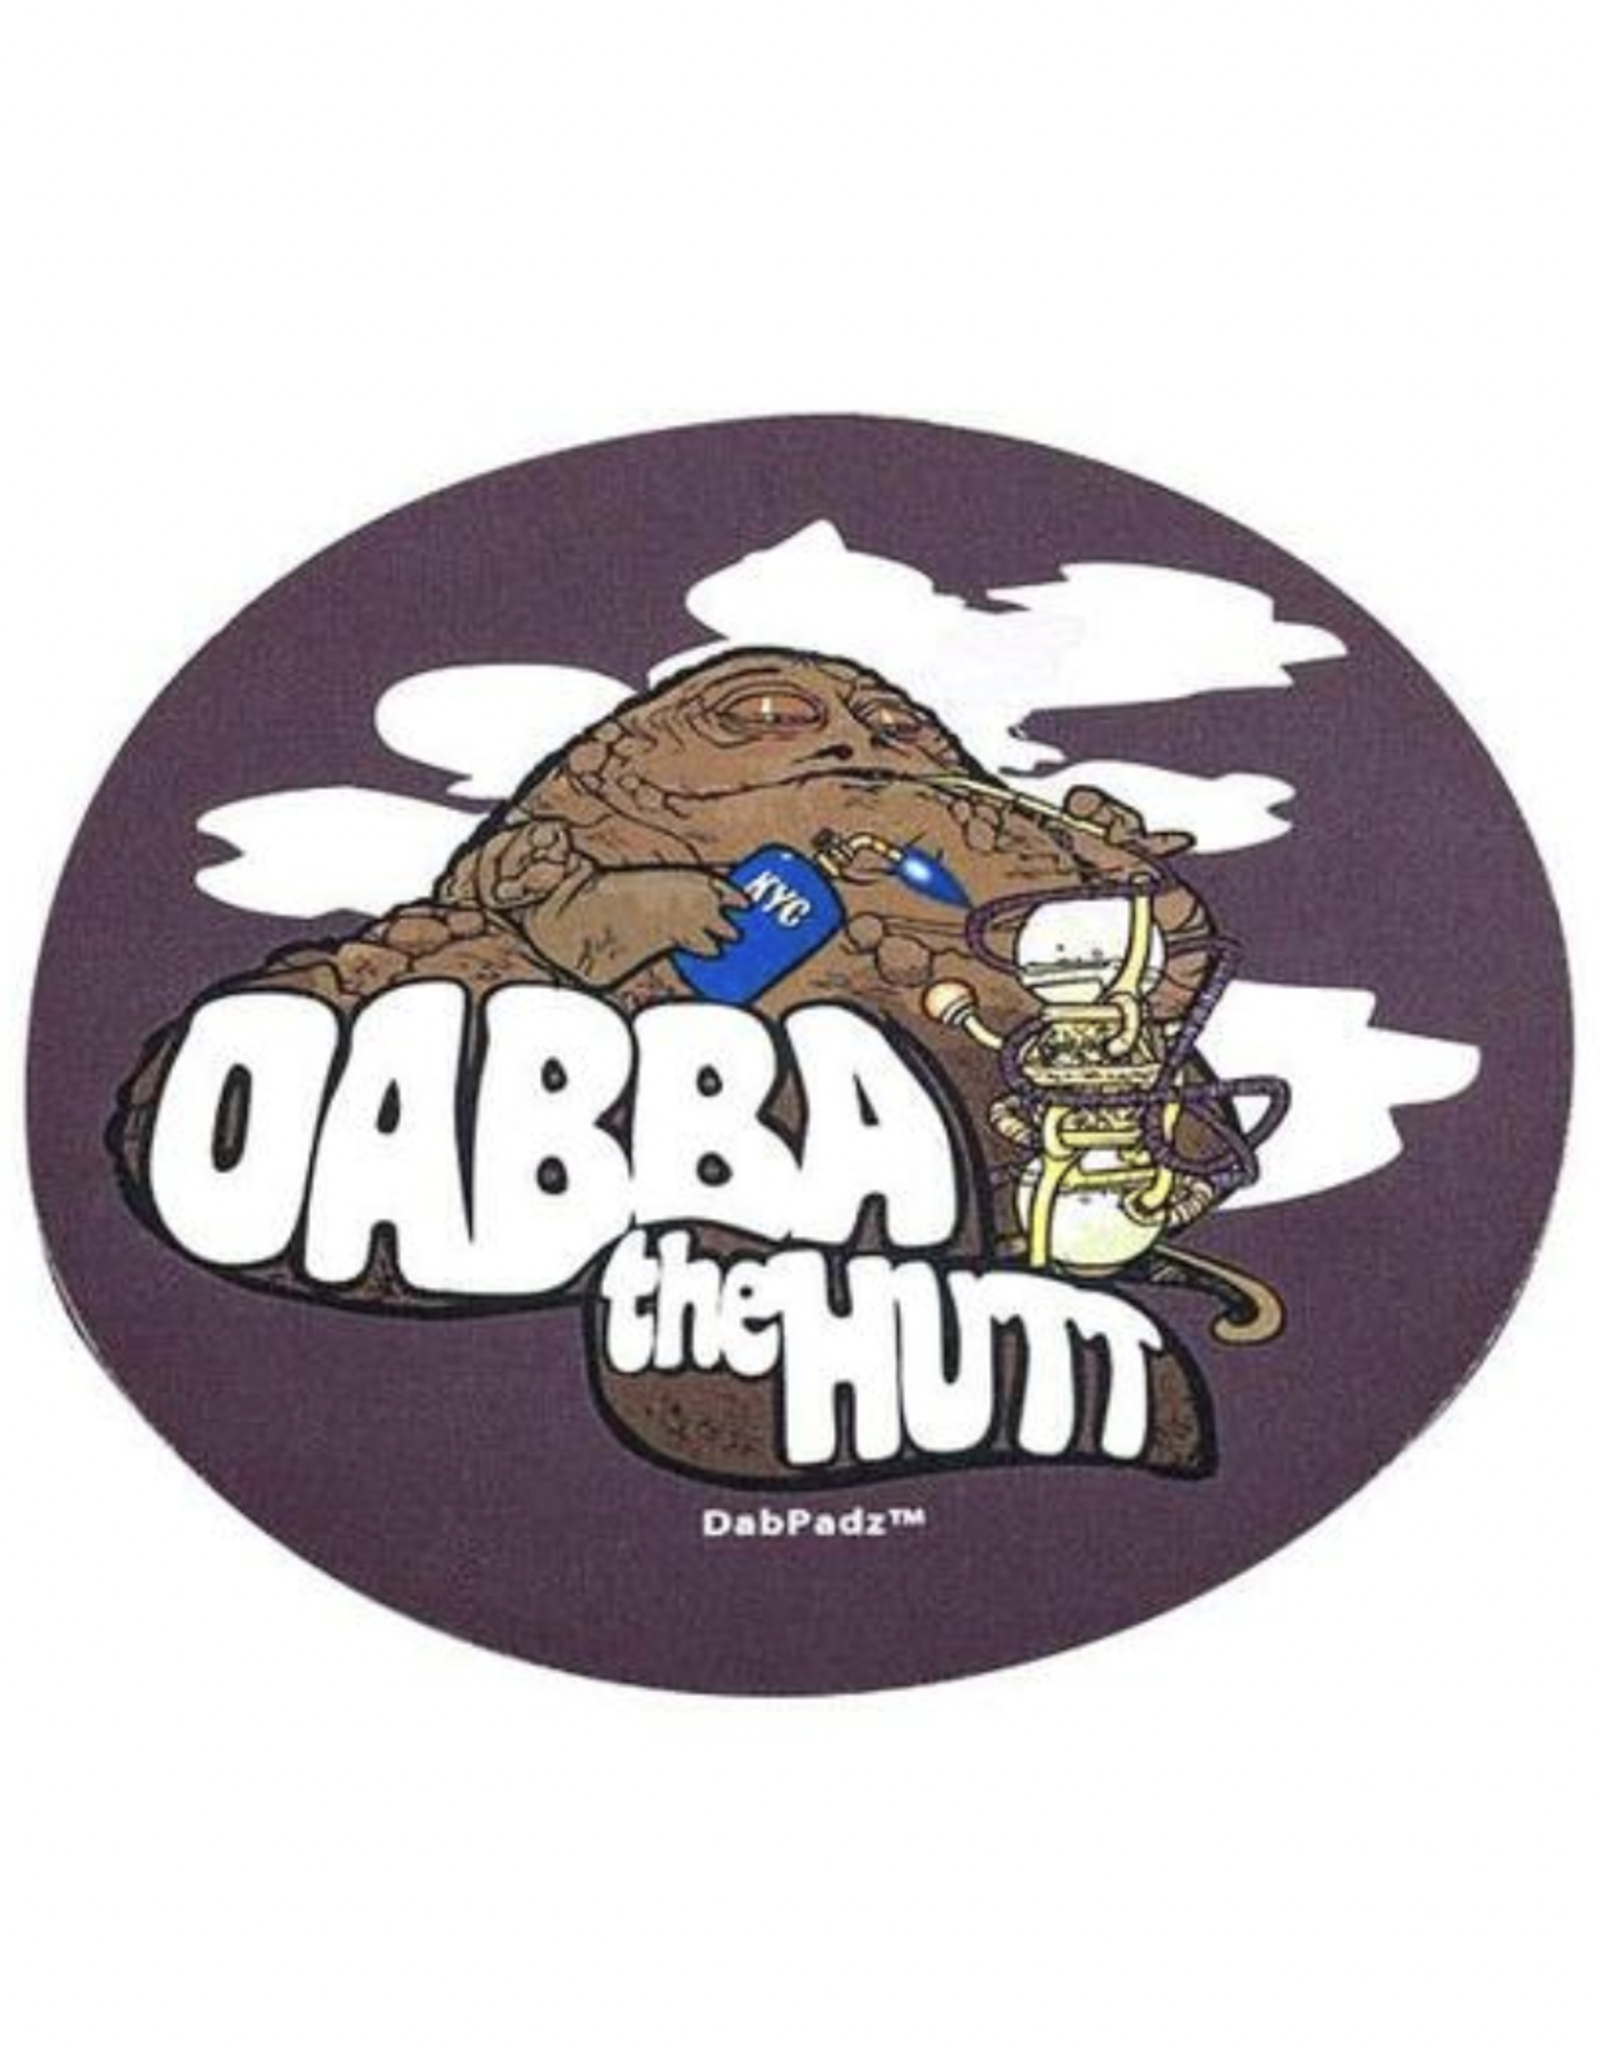 8" Dabba the Hut Dab Mat by DabPadz